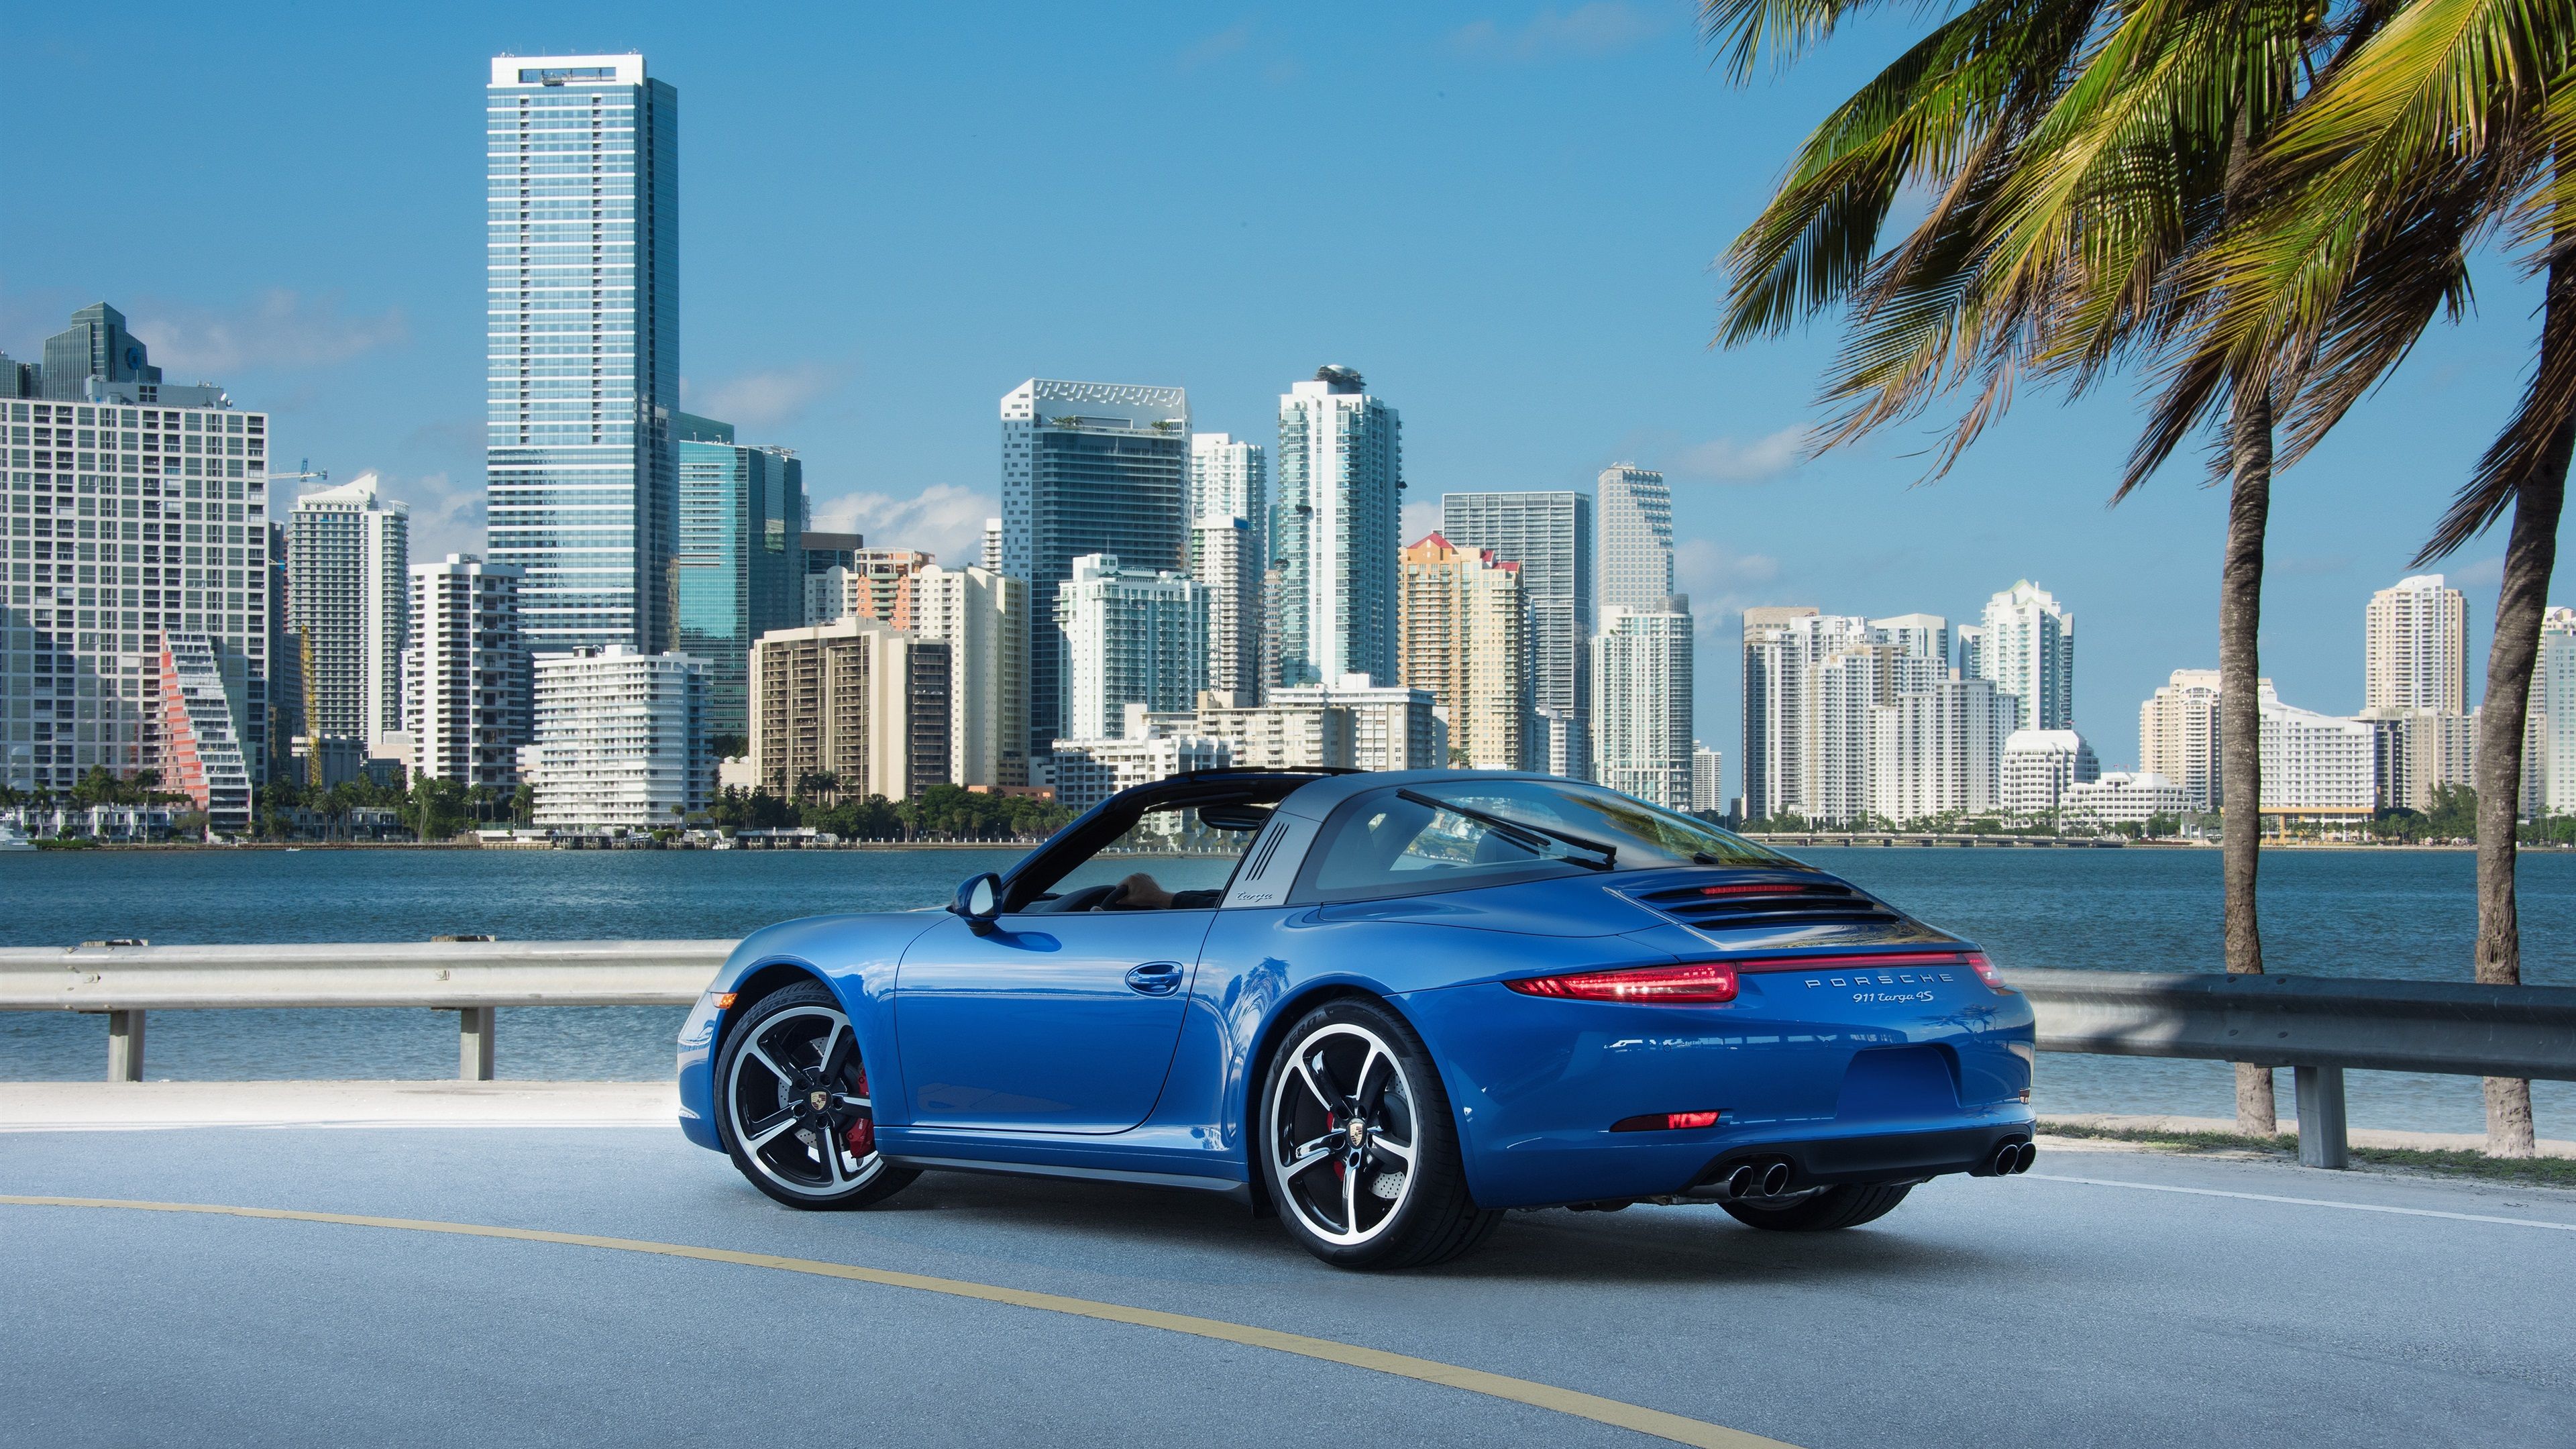 Wallpaper Porsche 911 Targa 4S blue supercar at city 3840x2160 UHD 4K Picture, Image